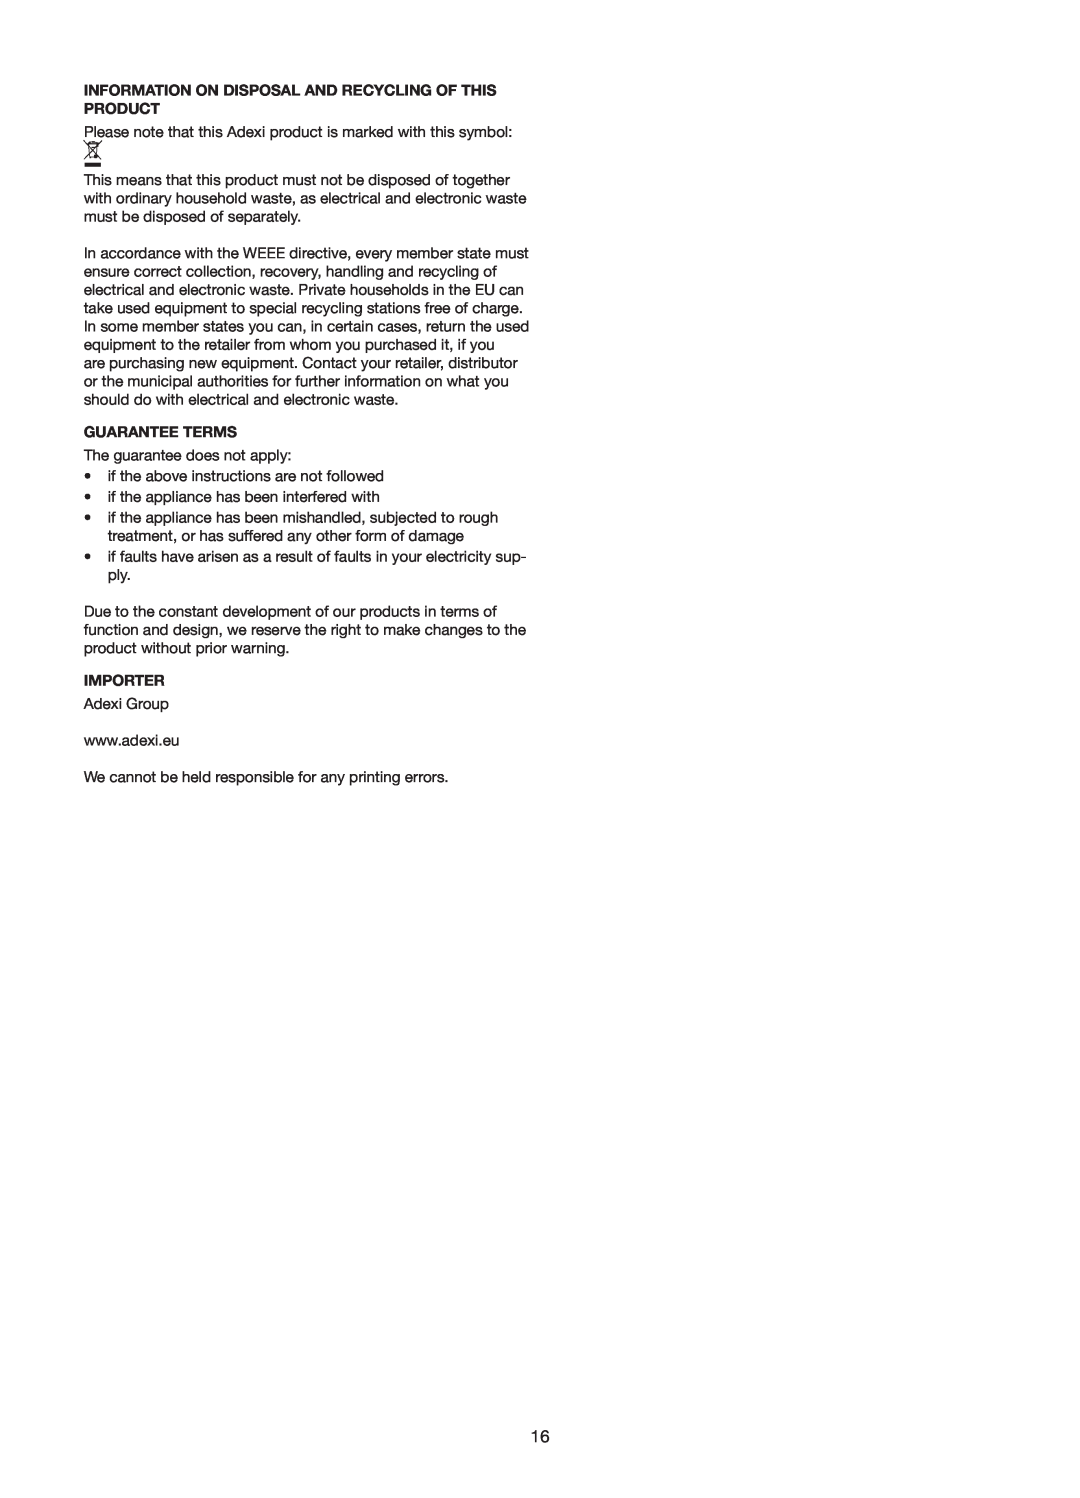 Melissa 640-110/114/127 manual Guarantee Terms, Importer 